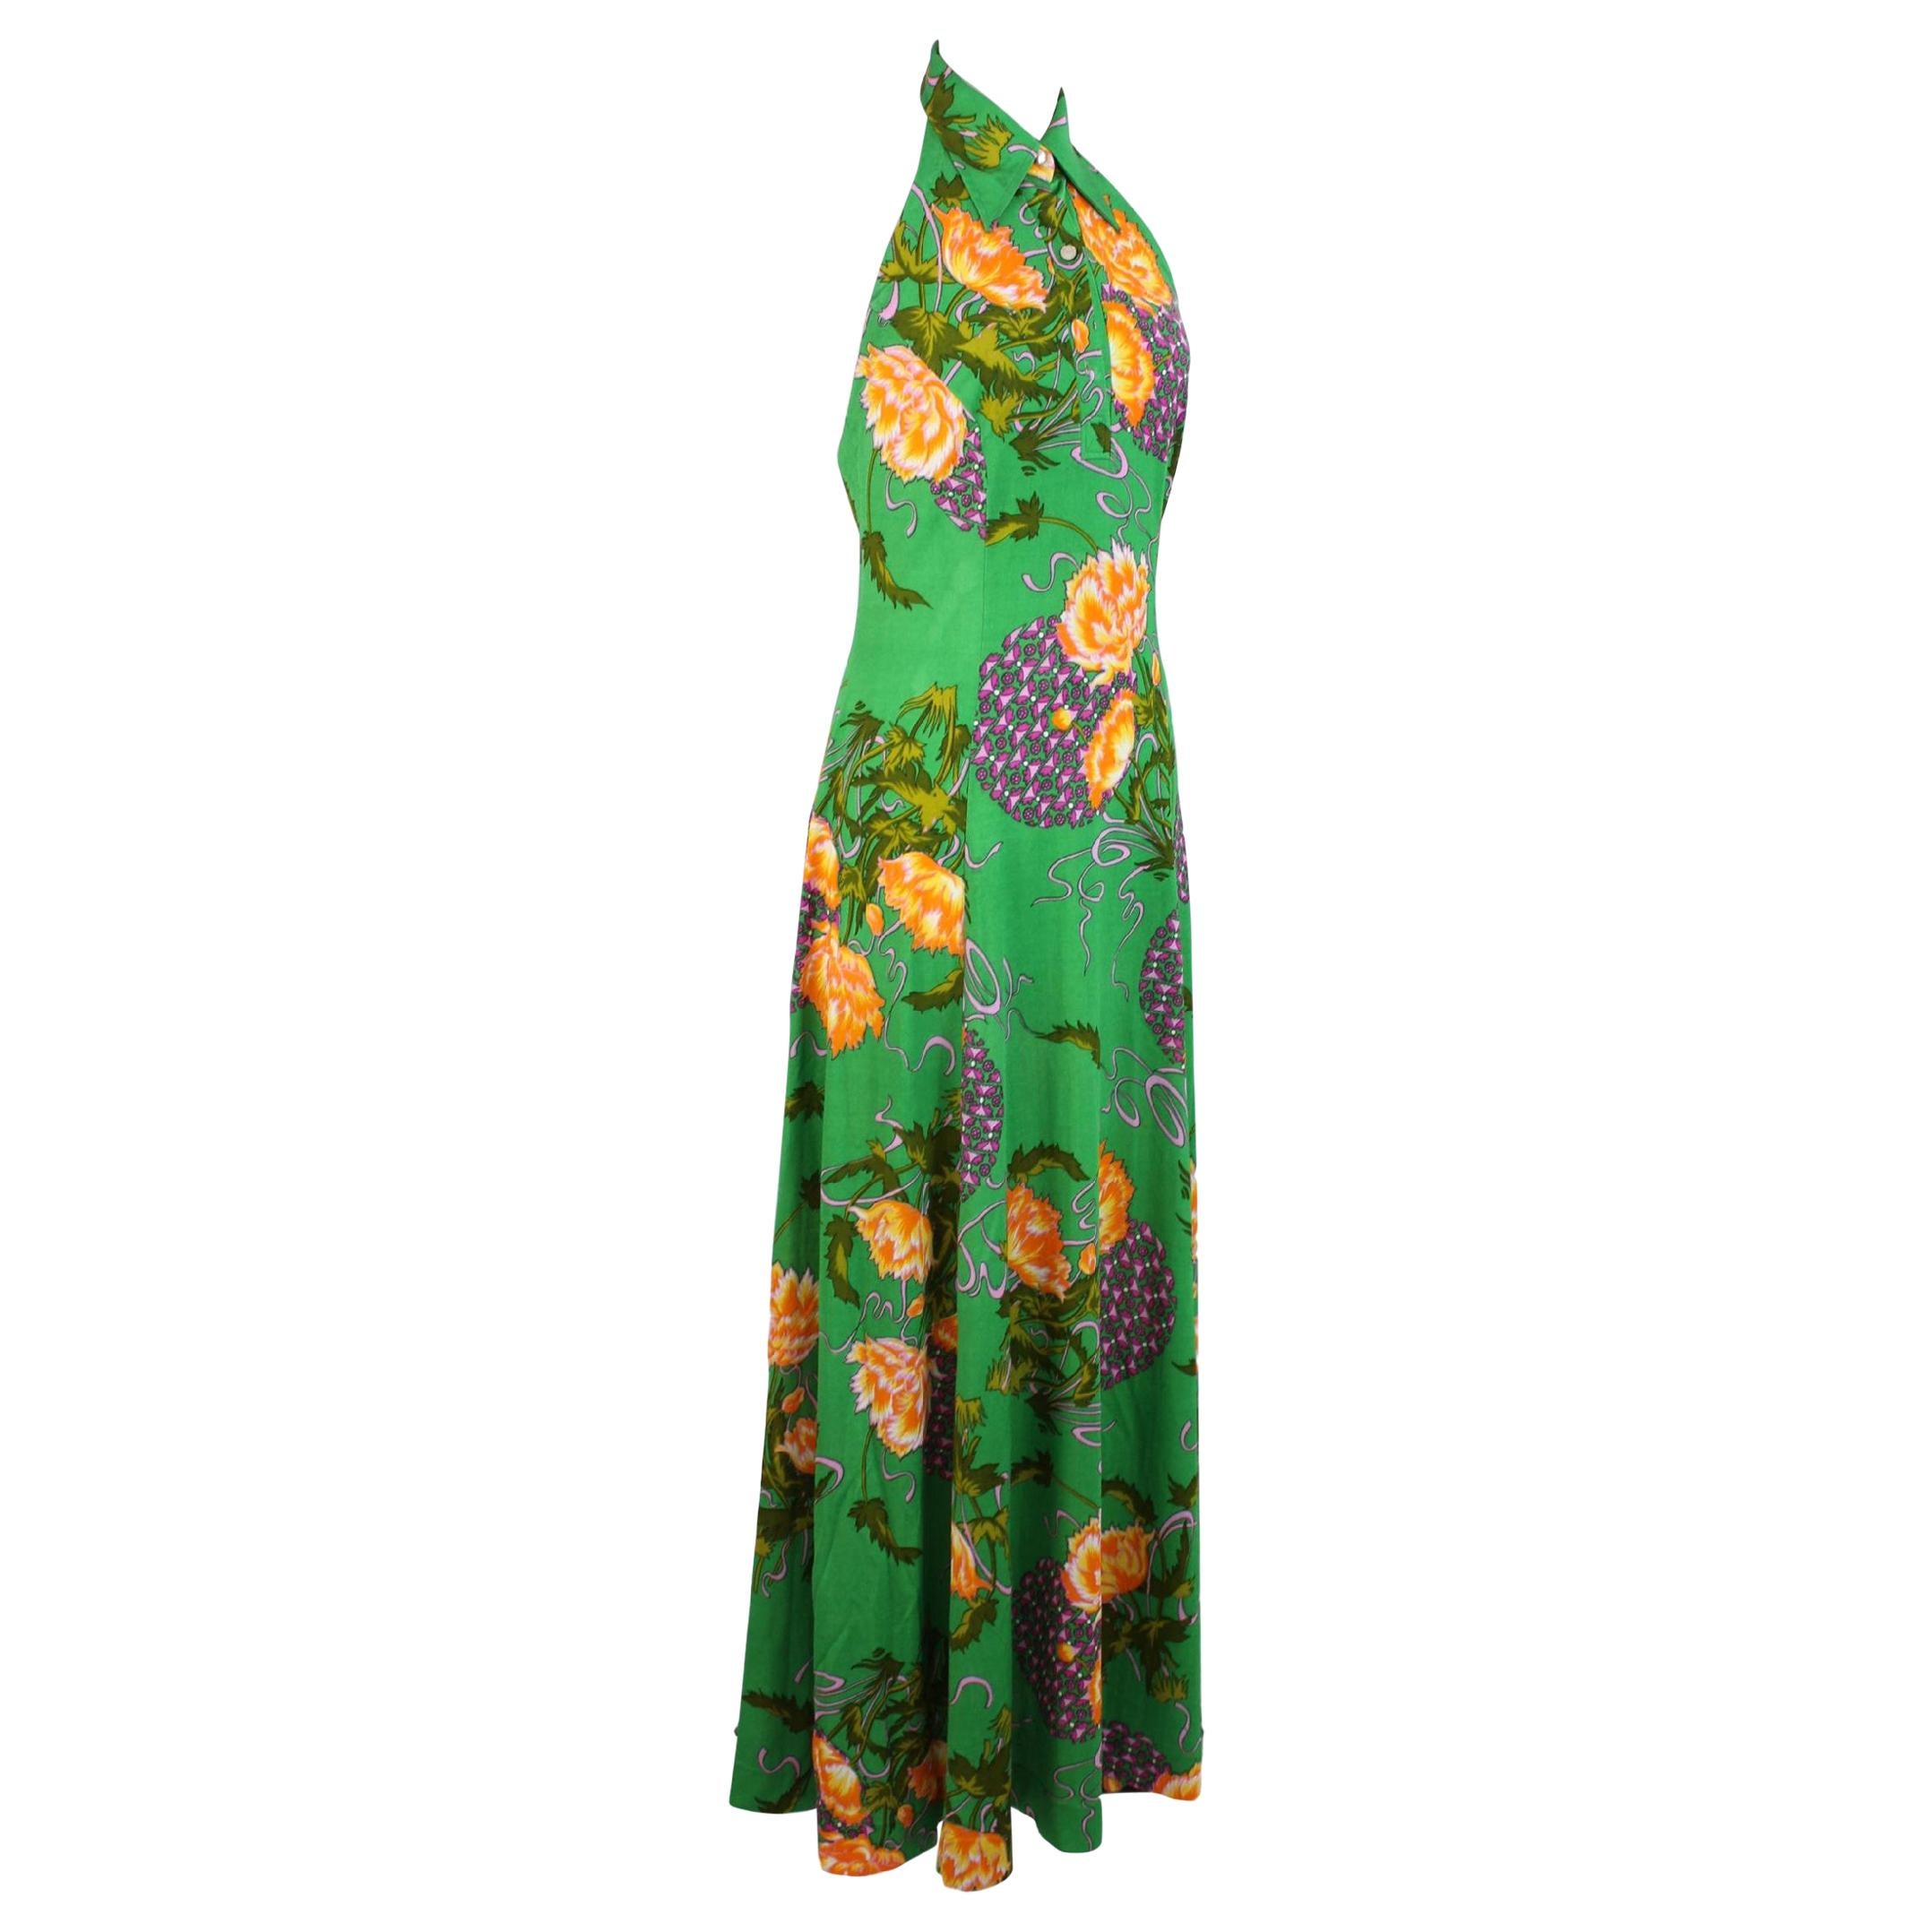 Vintage Floral Green Long Cocktail Handmade Dress 1980s